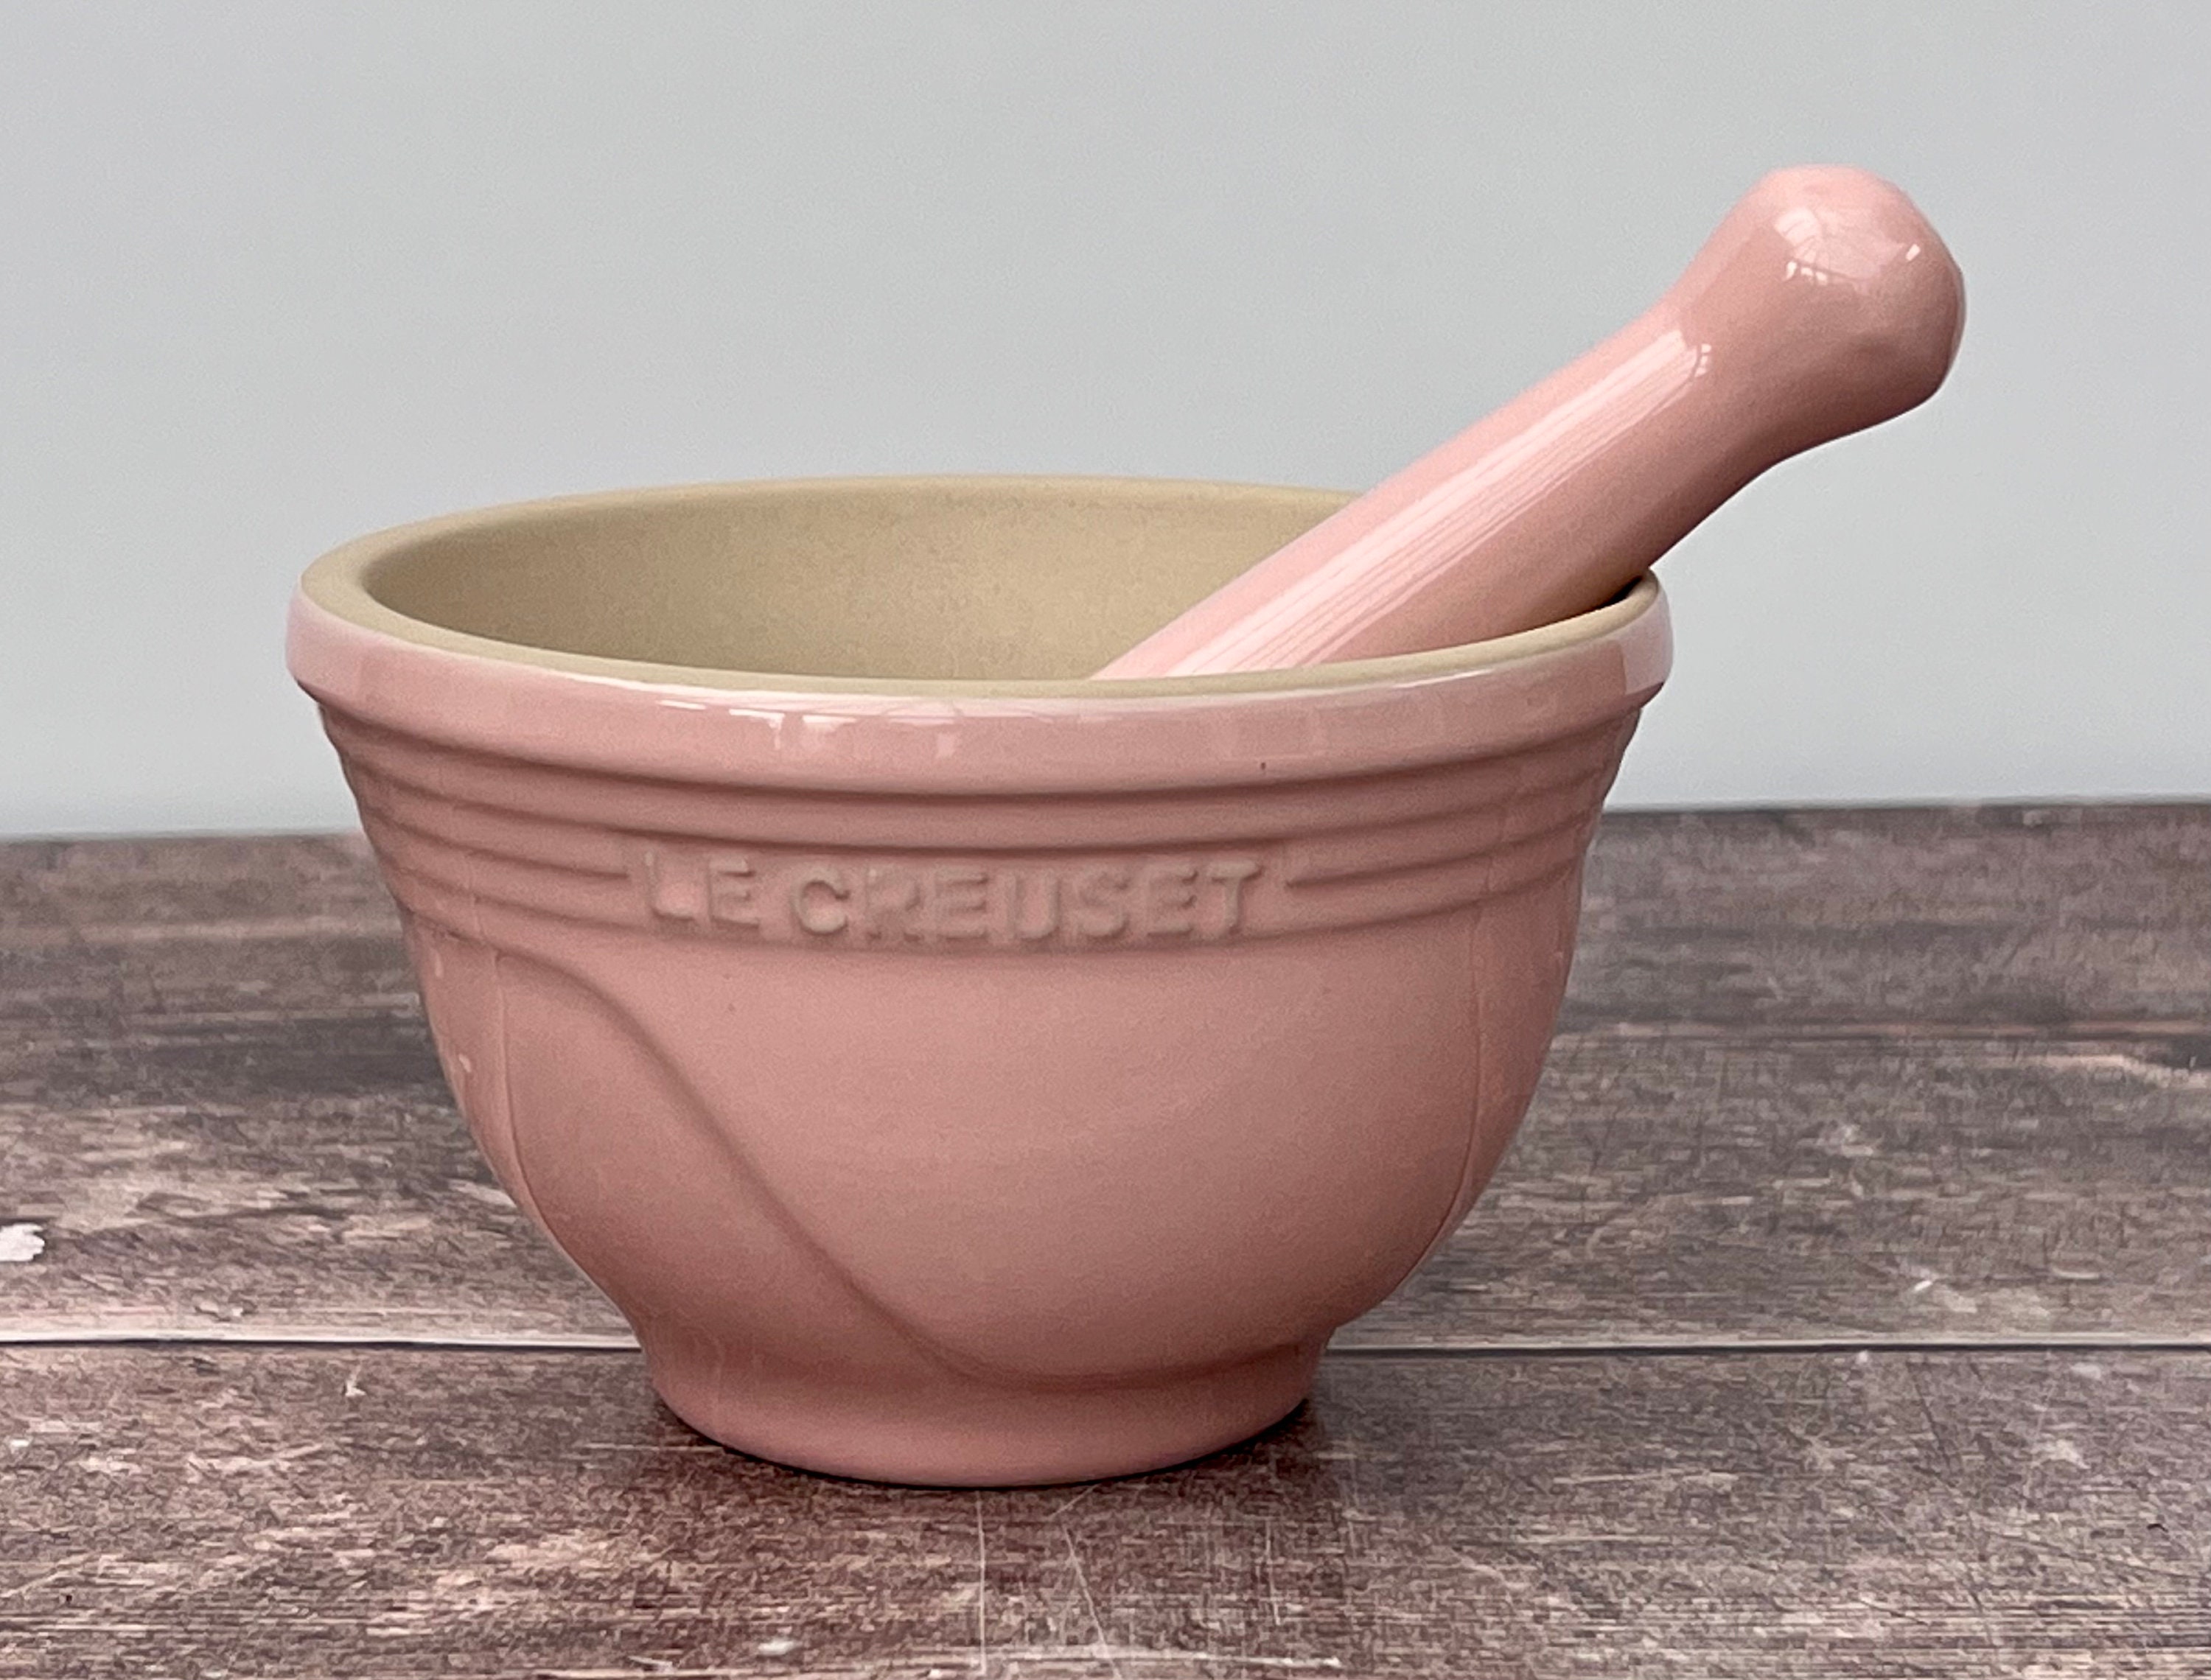 New Le Creuset 2 1/4 Qt. Rice Pot Casserole Maker Cooker Chiffon Pink  Hibiscus